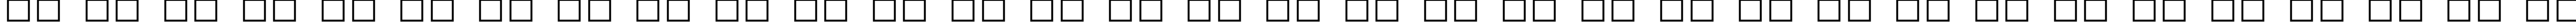 Пример написания русского алфавита шрифтом Letter Gothic MT Bold Oblique